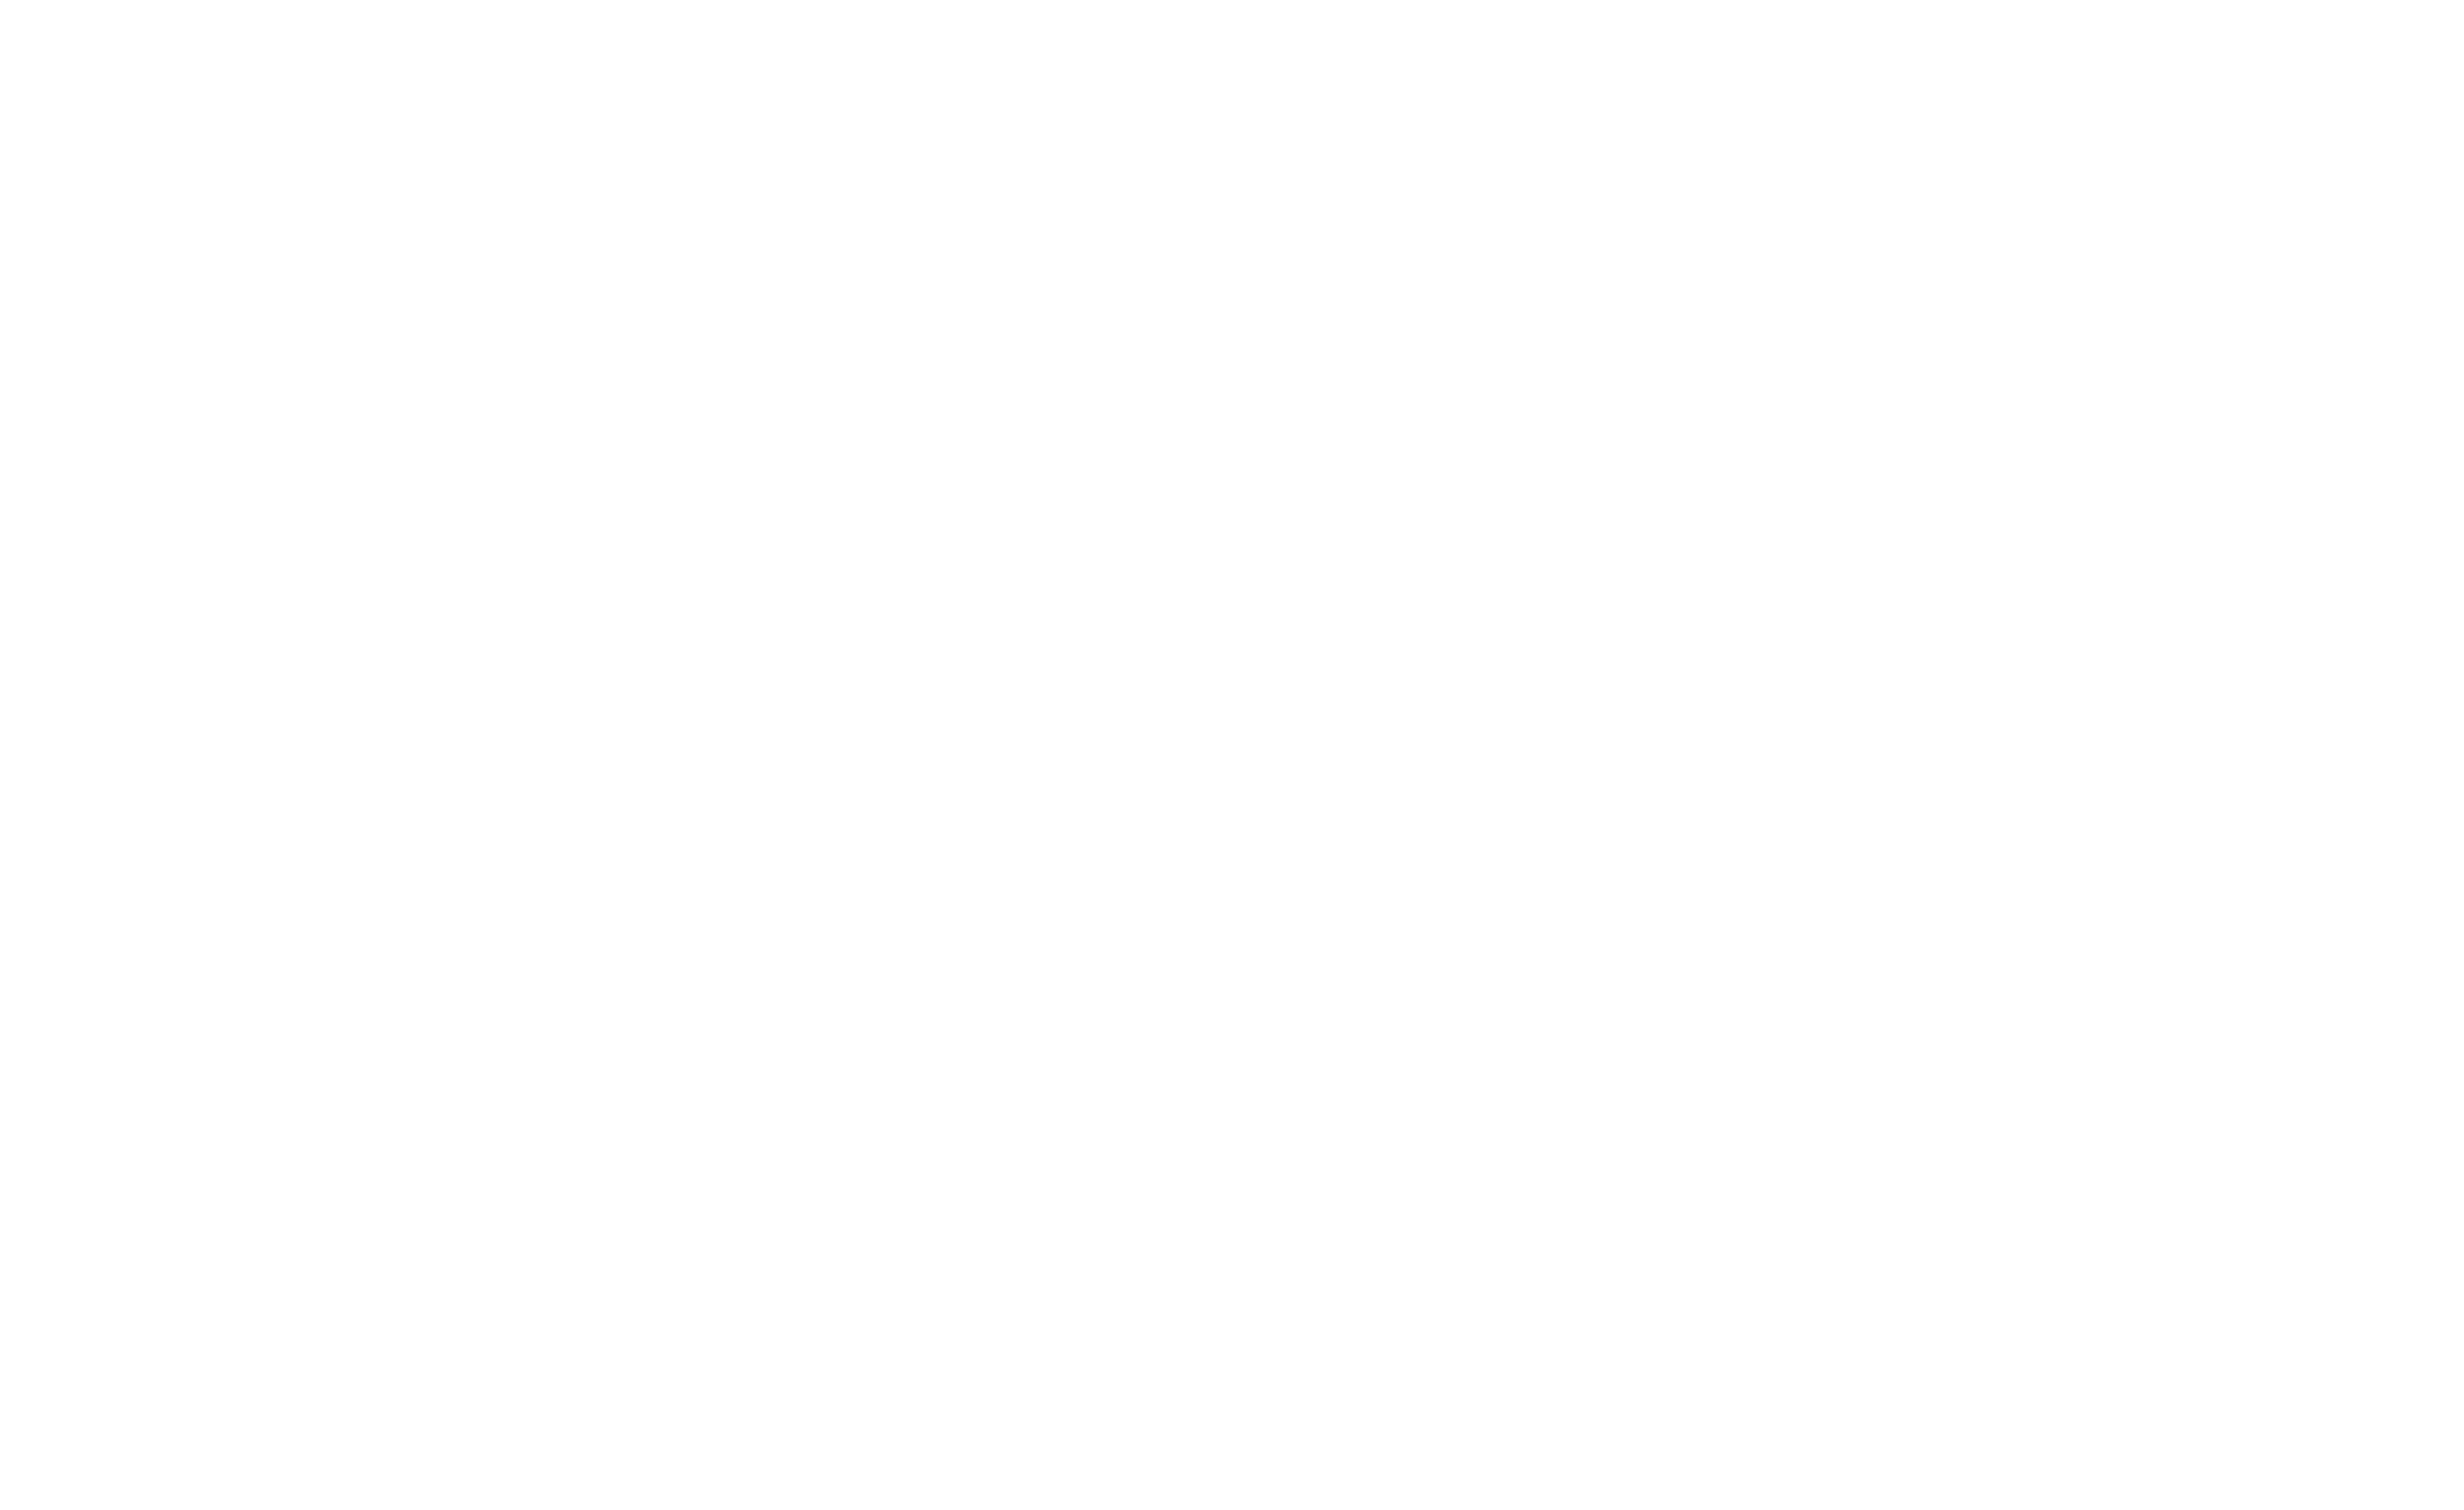 大徳運送有限会社 Welcome to Our Corporate Site